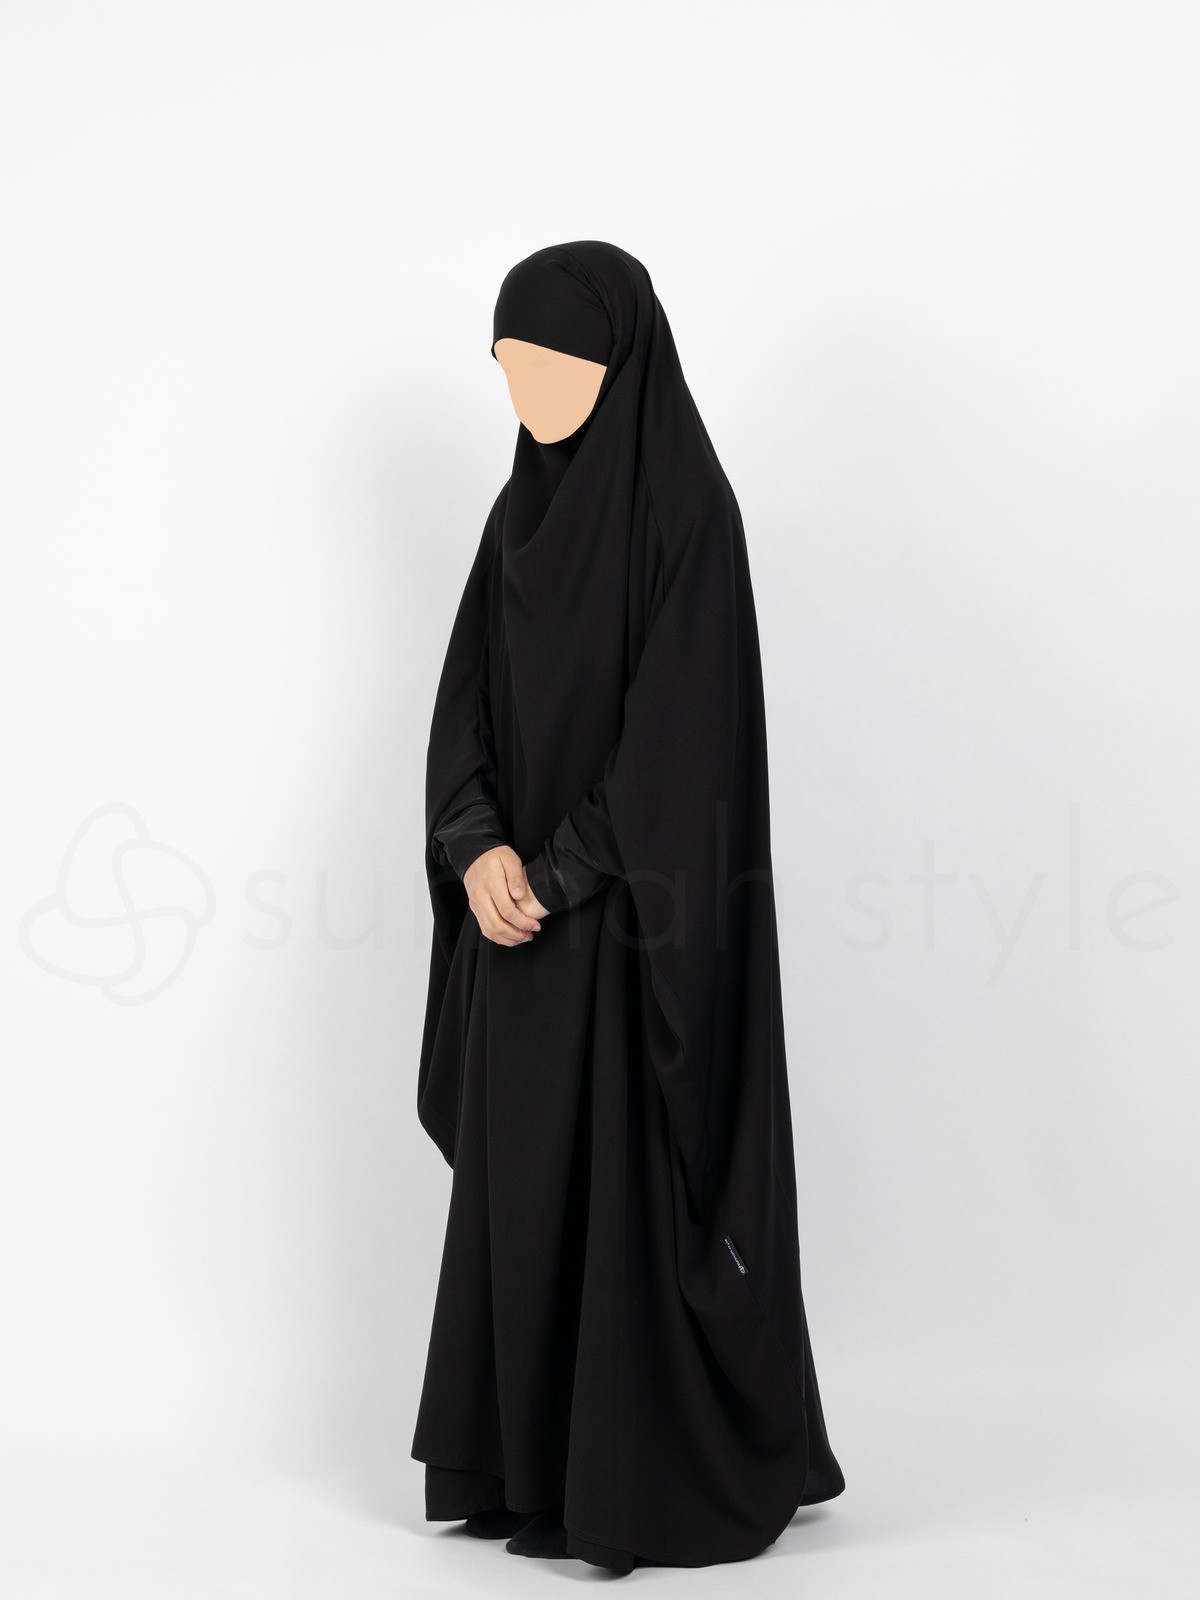 Sunnah Style - Girls Plain Full Length Jilbab (Black)